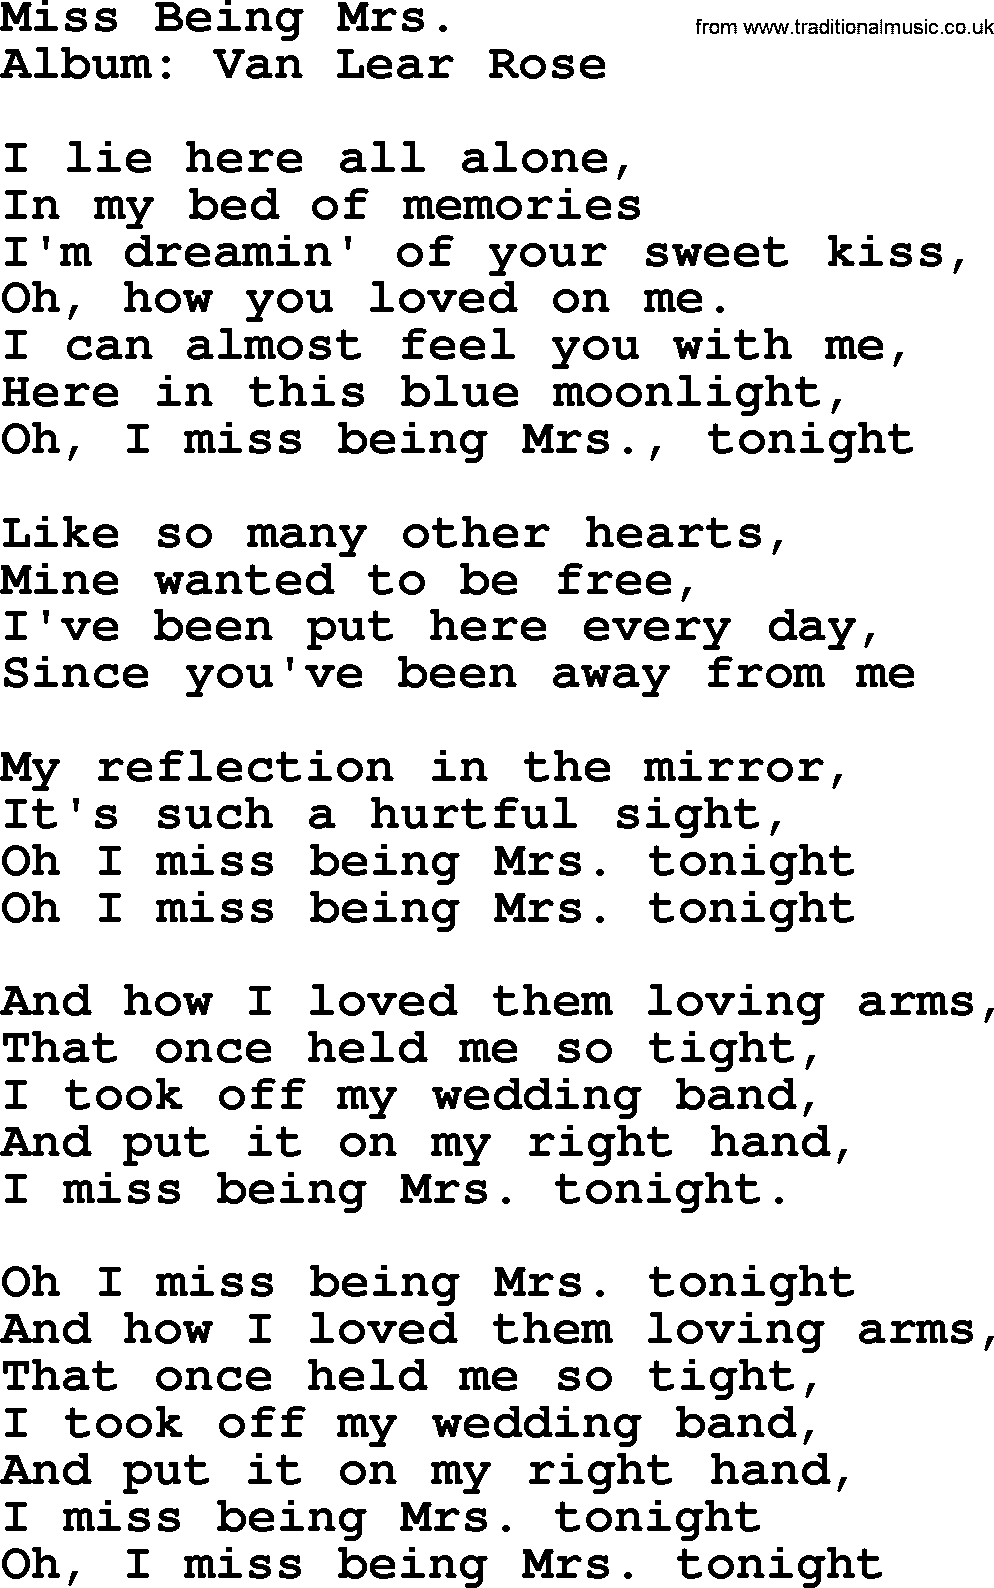 Loretta Lynn song: Miss Being Mrs. lyrics